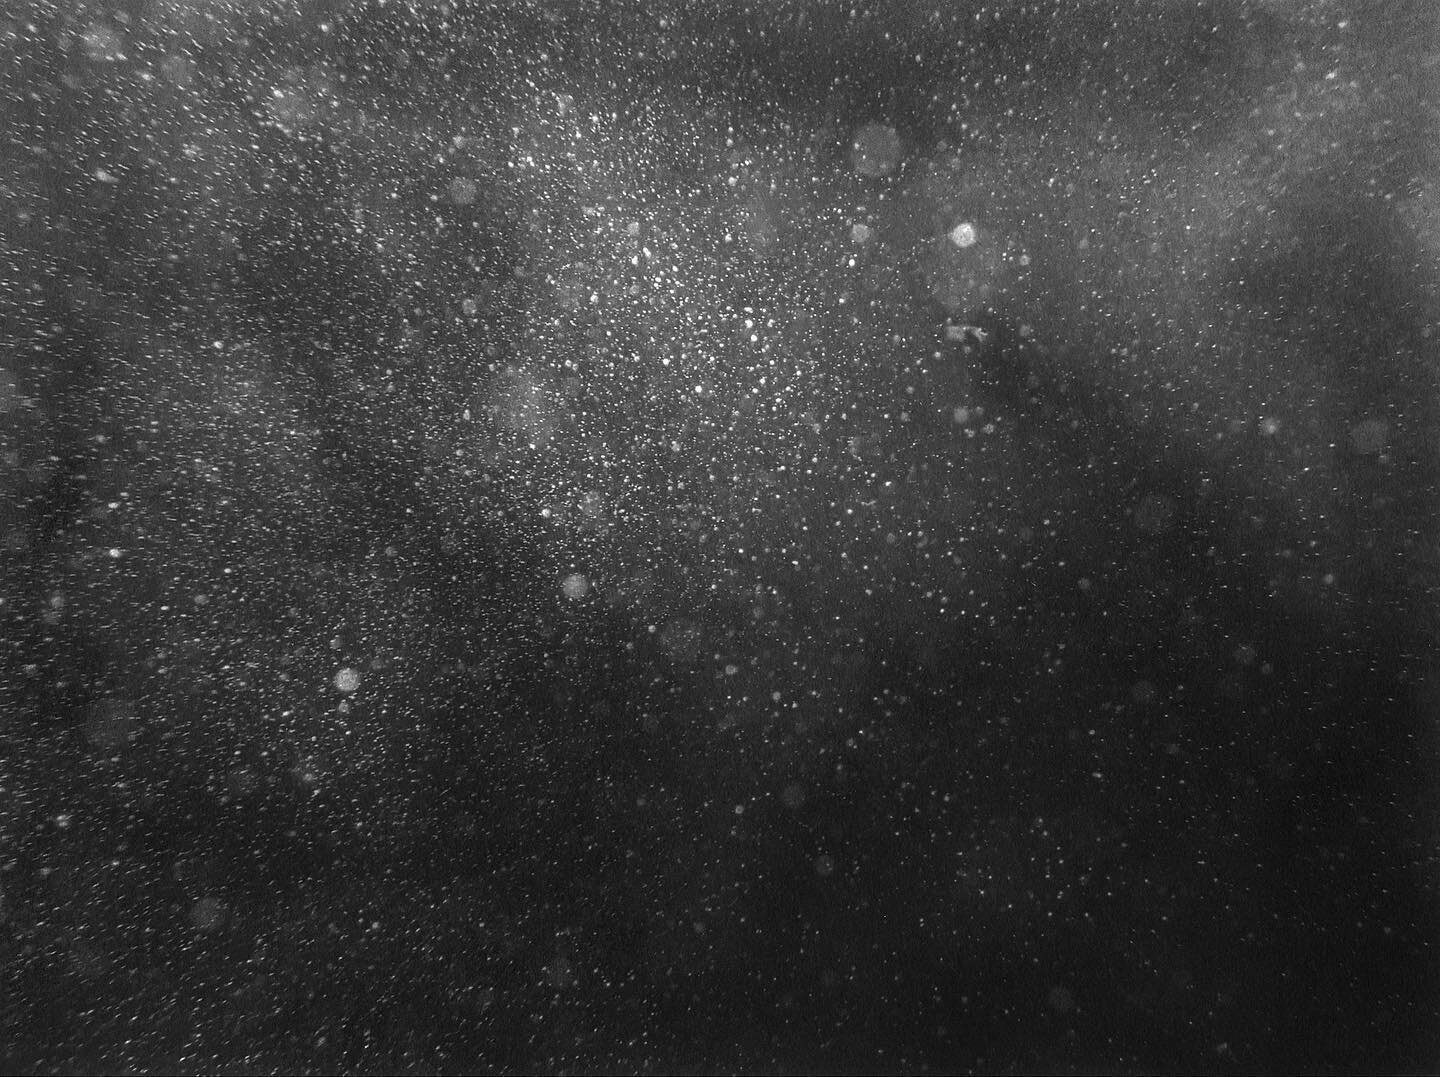 Underwater Interstellar
Archival Pigment Print, Charcoal, Wax
14.5&quot; x 18.5&quot;

On view at Archipelago Contemporary Art of the Salish Sea, ArtSpring, Salt Spring Island, BC, April 21 - May 24. #archipelago #salishsea #underwaterlandscape #pnwa